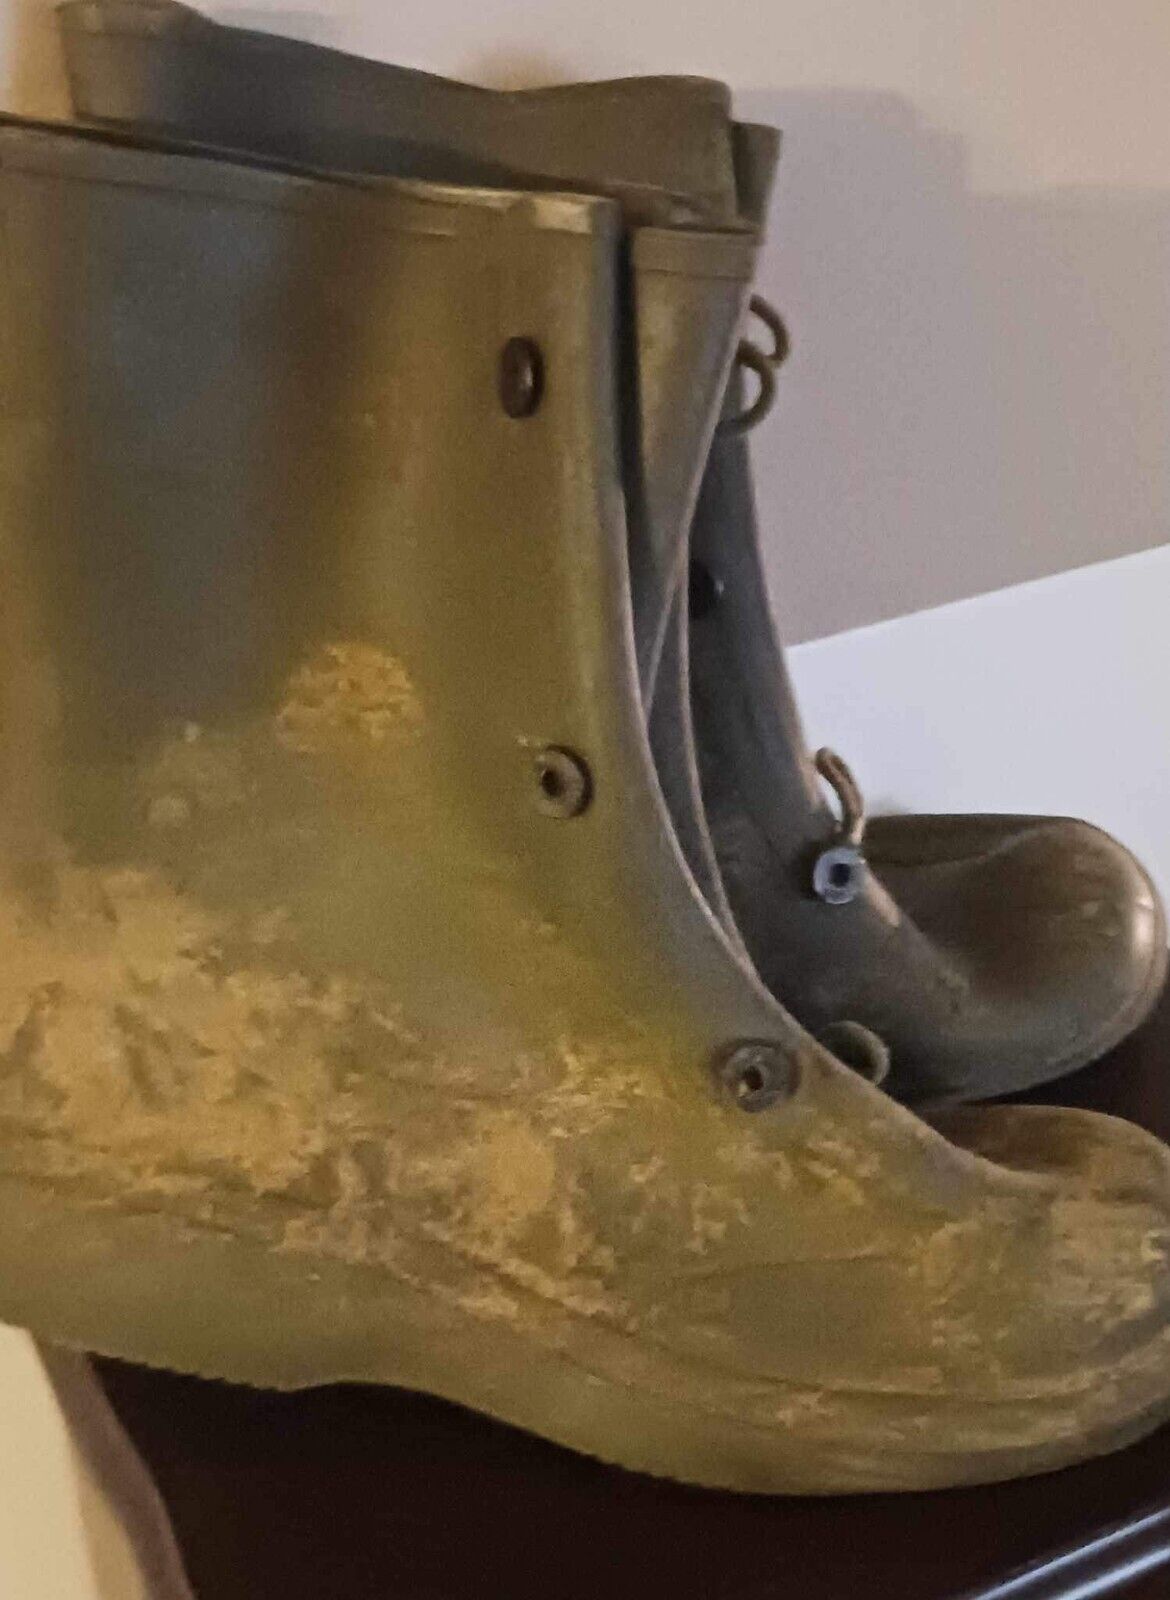 Authentic and worn in Vietnam waterproof boots